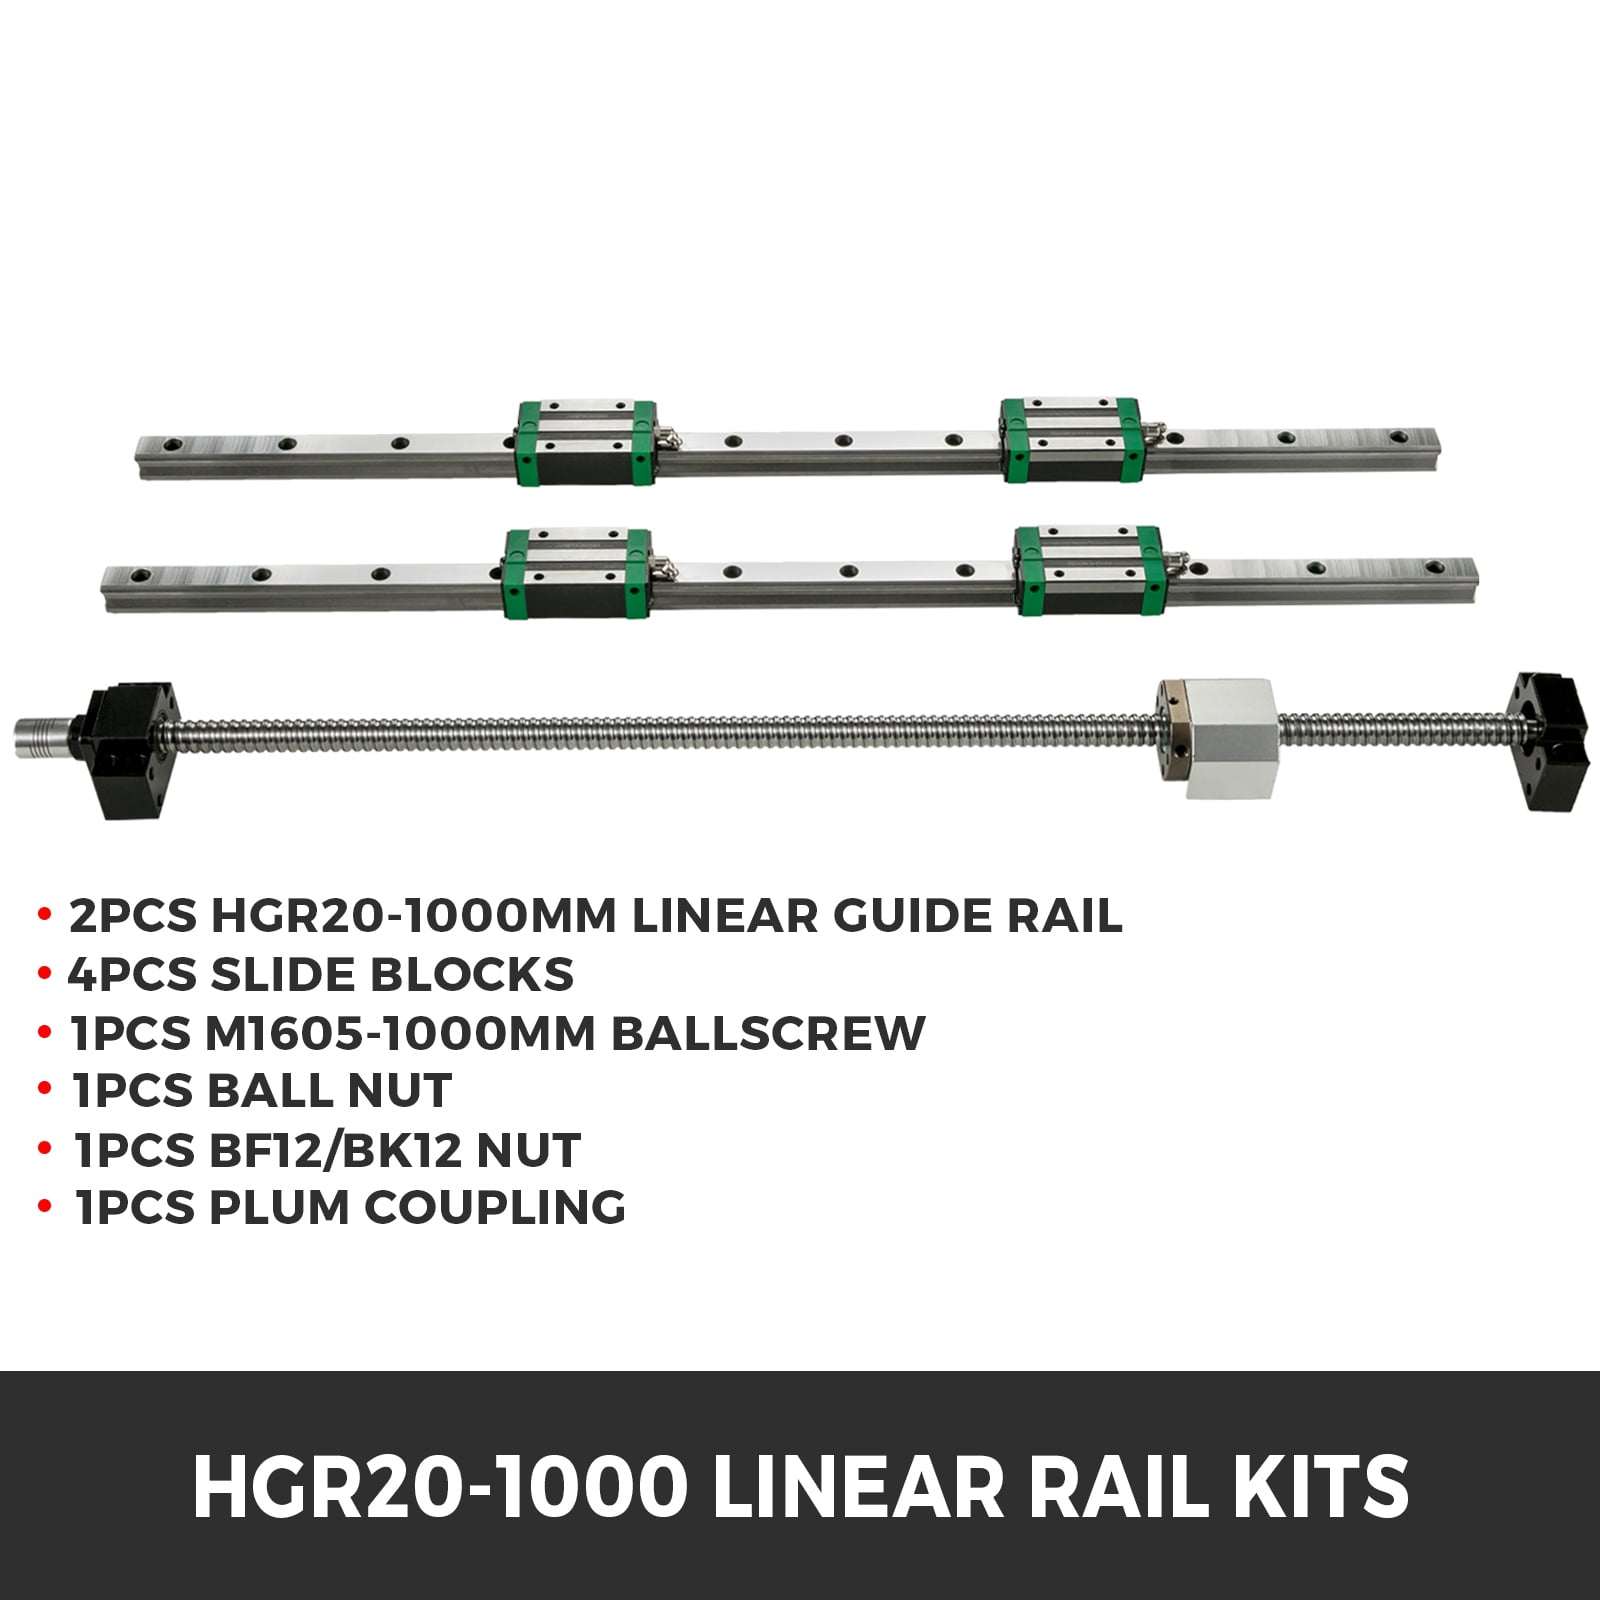 Coupling DSG16H Nut Housing 1PCS RM1605-1550mm Ballscrew with BF12/BK12 Kit Slide Blocks Linear Guide Rail Ball Screw Set for DIY CNC Routers Lathes 2Pcs HGR20-1500mm Linear Rail 